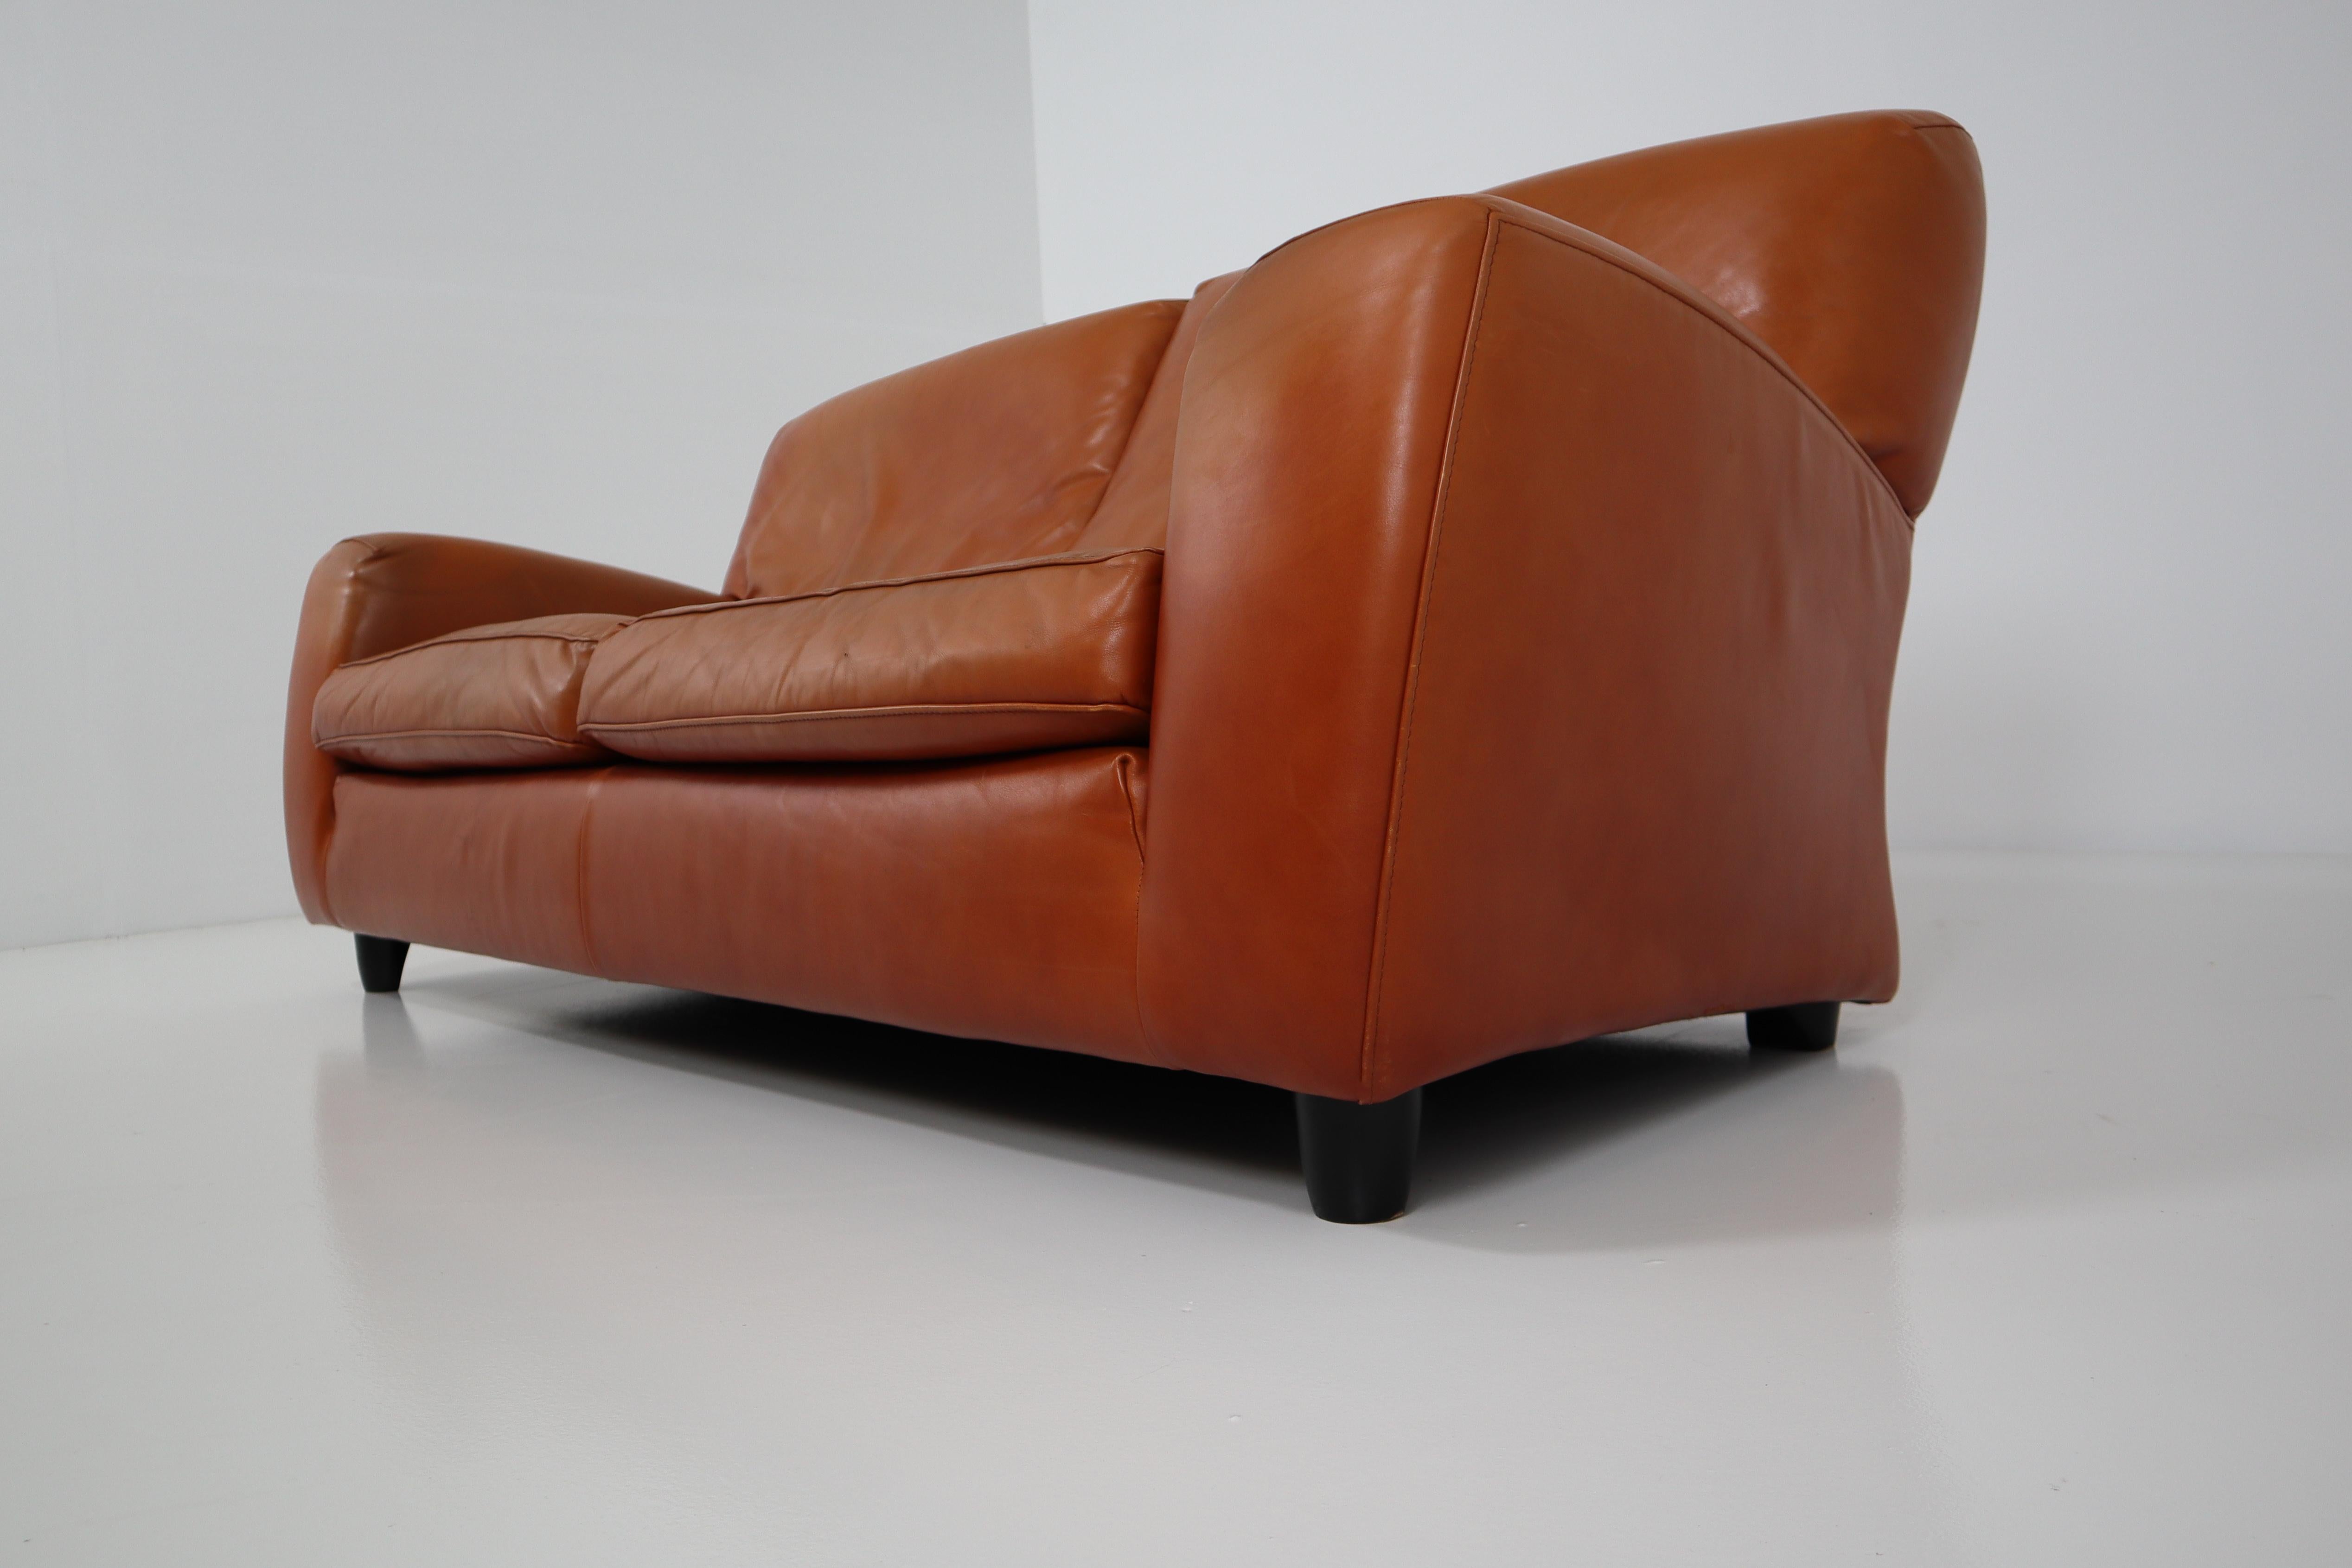 Late 20th Century 1980s Italian Molinari Cognac Color 'Bull' Leather Sofa Model 'Fatboy'